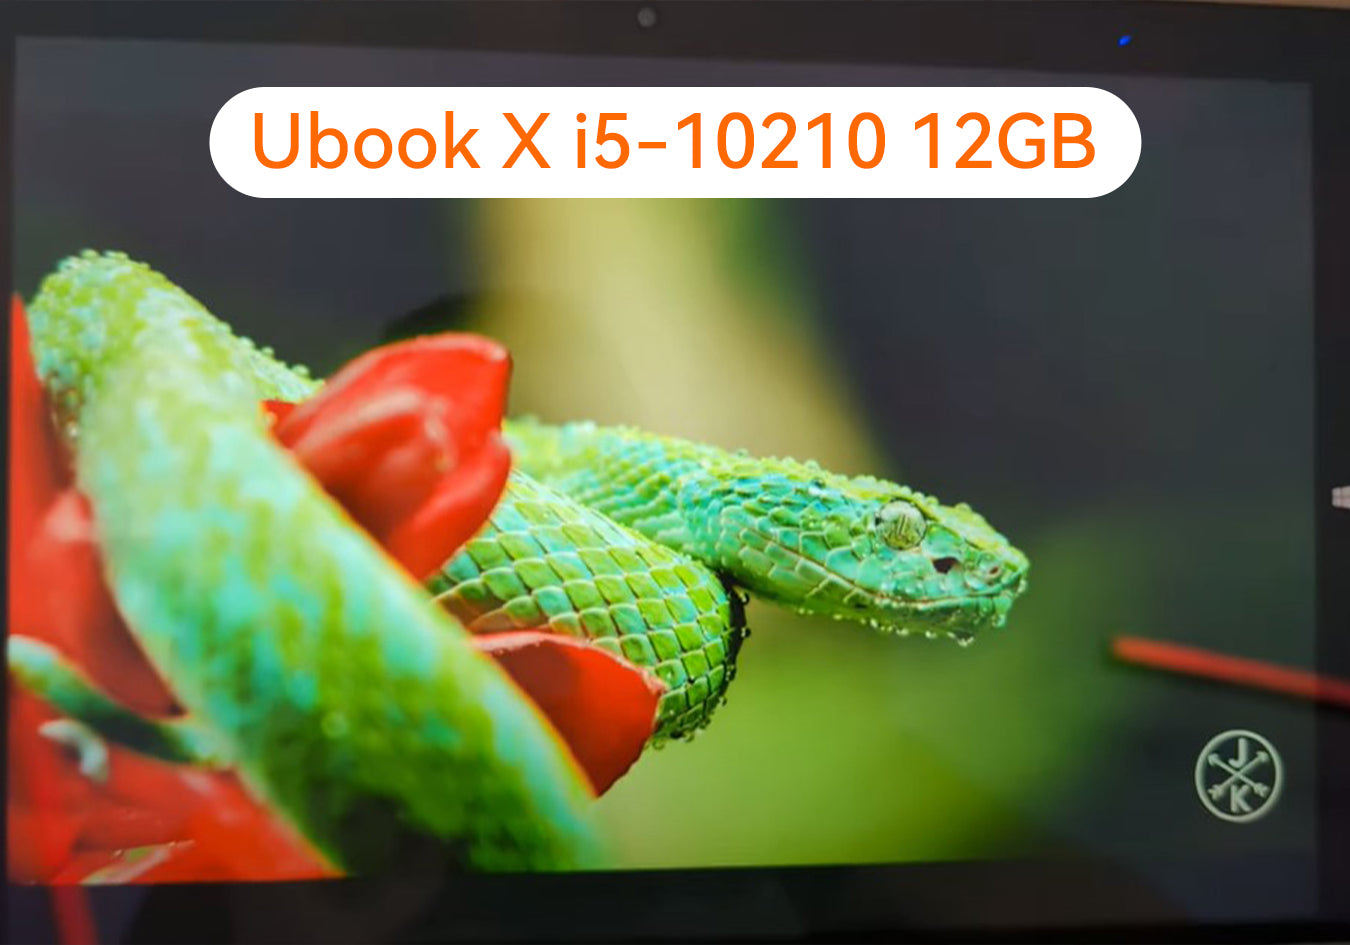 Ubook X i5-10210 12GB: Carlos Correia 